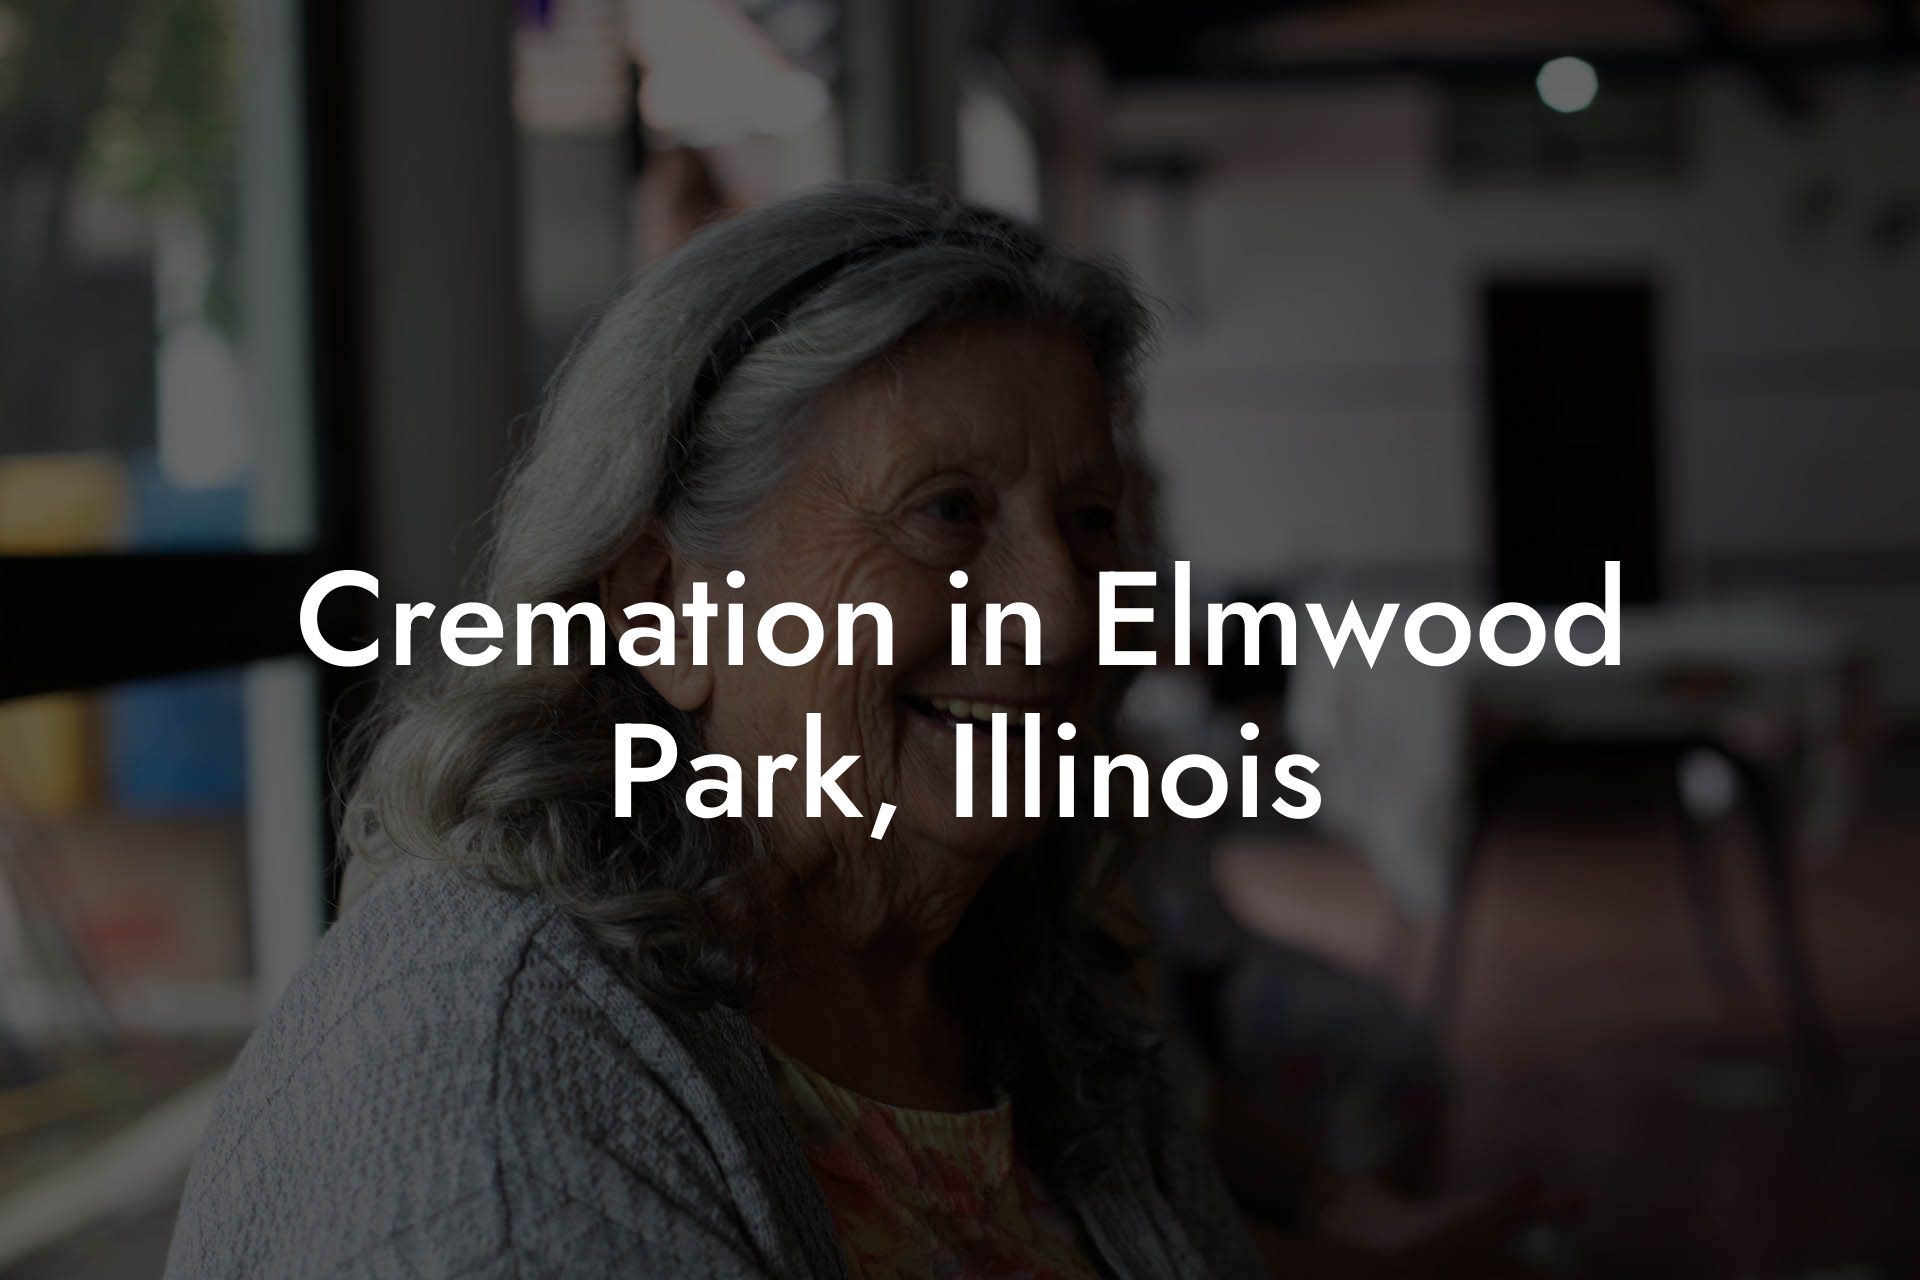 Cremation in Elmwood Park, Illinois